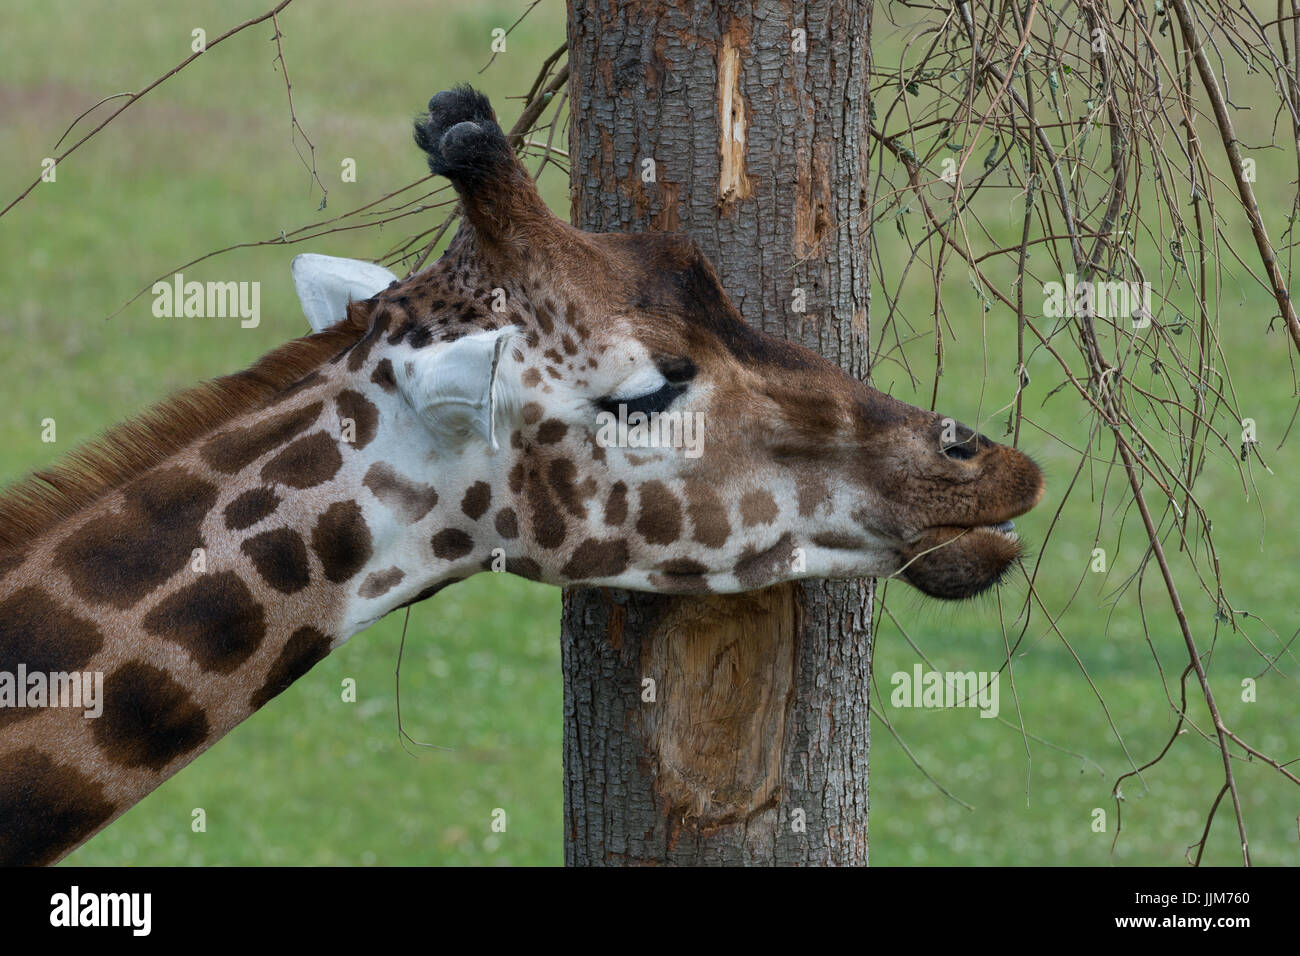 Giraffe in Gefangenschaft Stockfoto